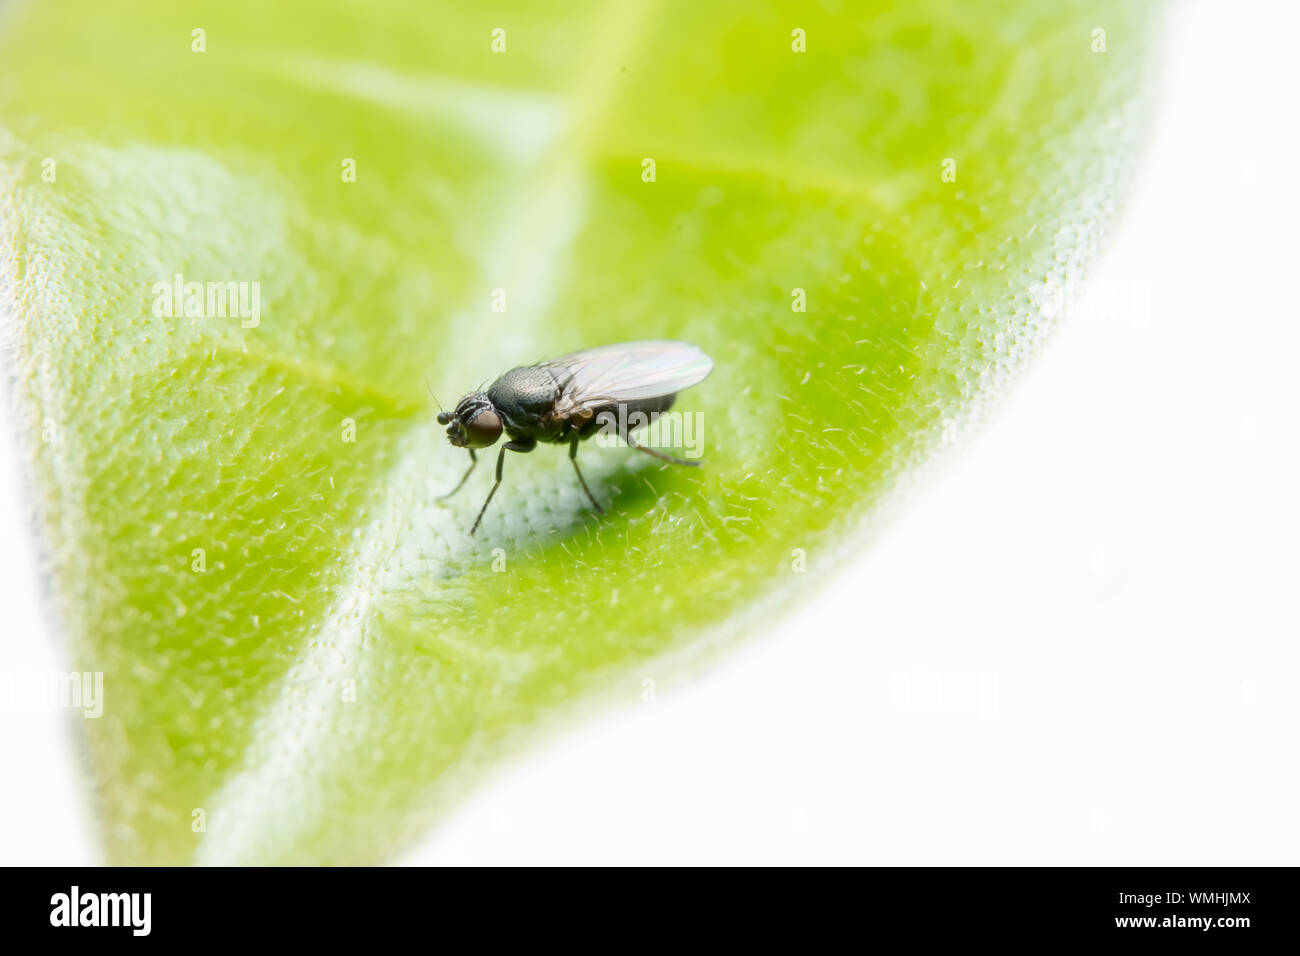 Close-up Of Fruitfly On Leaf Stock Photo